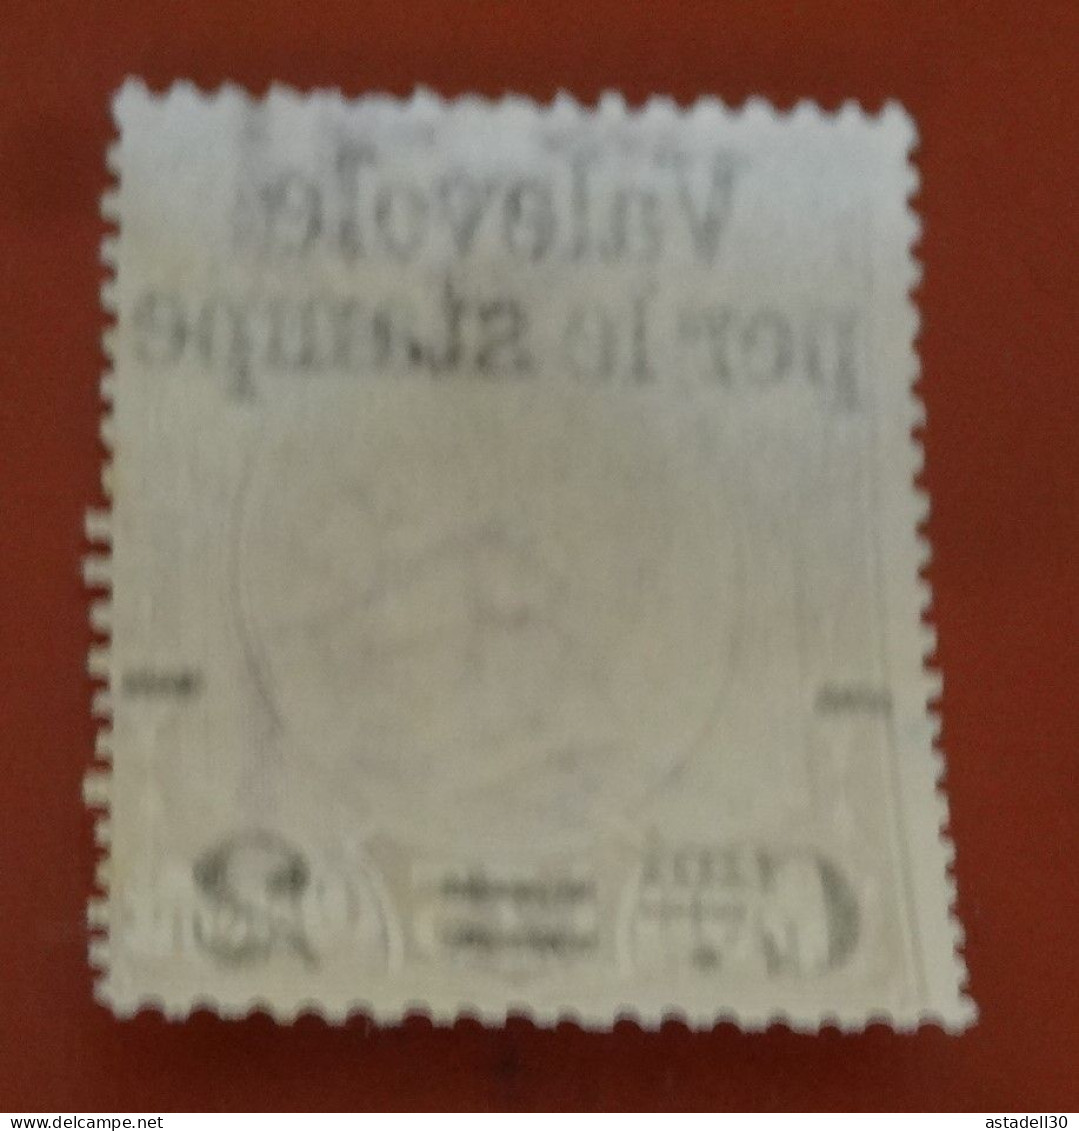 ITALIA - ITALIE Parcel Stamp 2c / 1.75c Marron - 1890, Mint NO GUM  ............ CL1-1-1b - Paketmarken